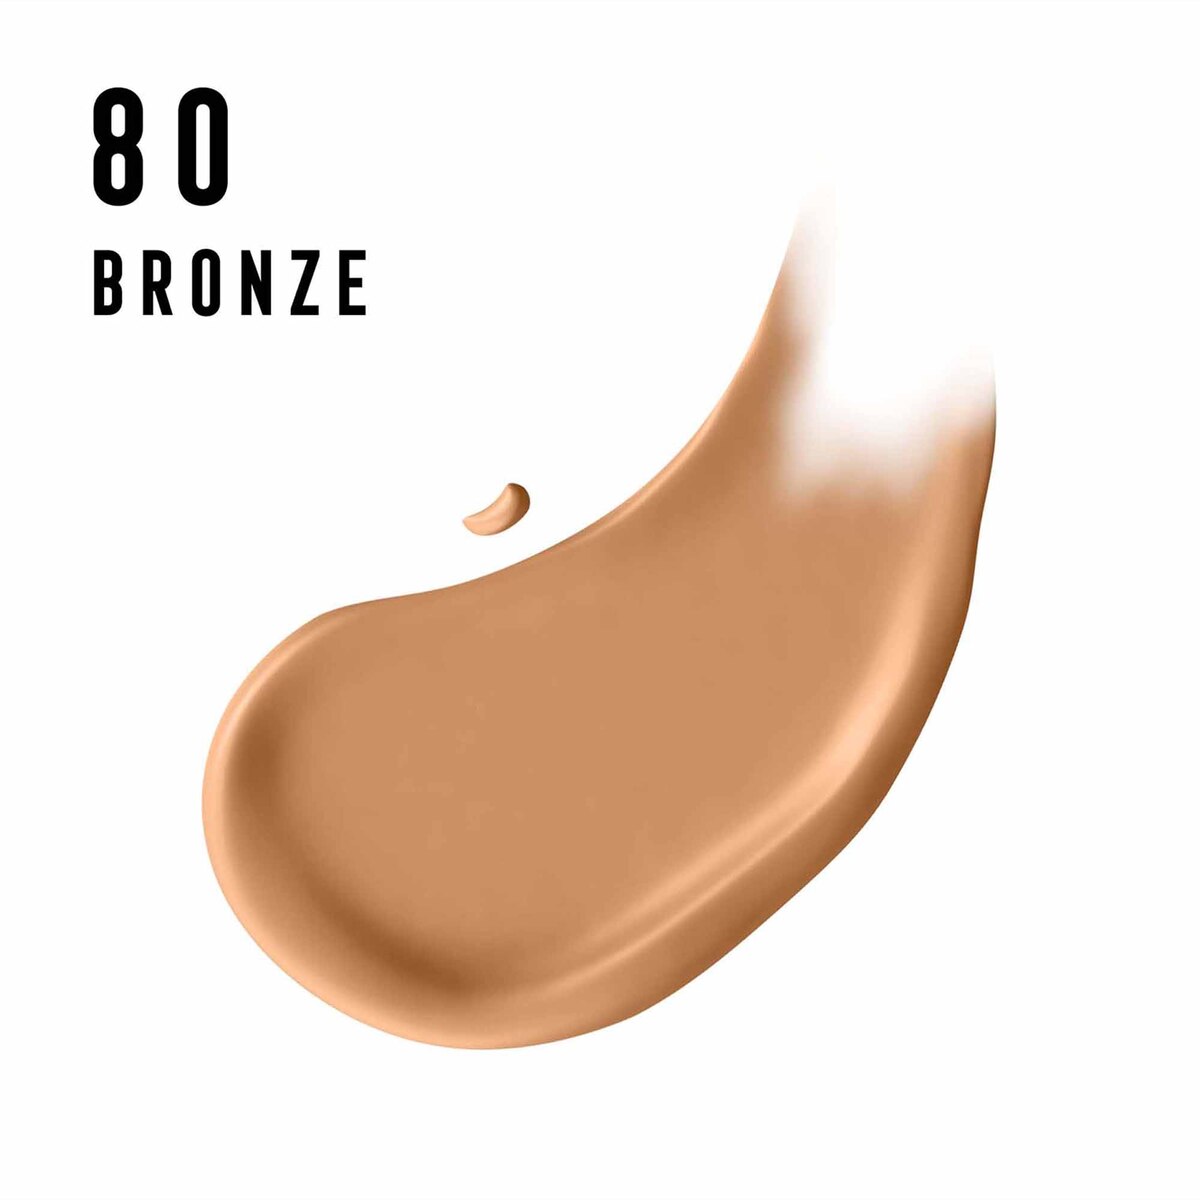 Max Factor Miracle Liquid Foundation 80, Bronze, 30 ml